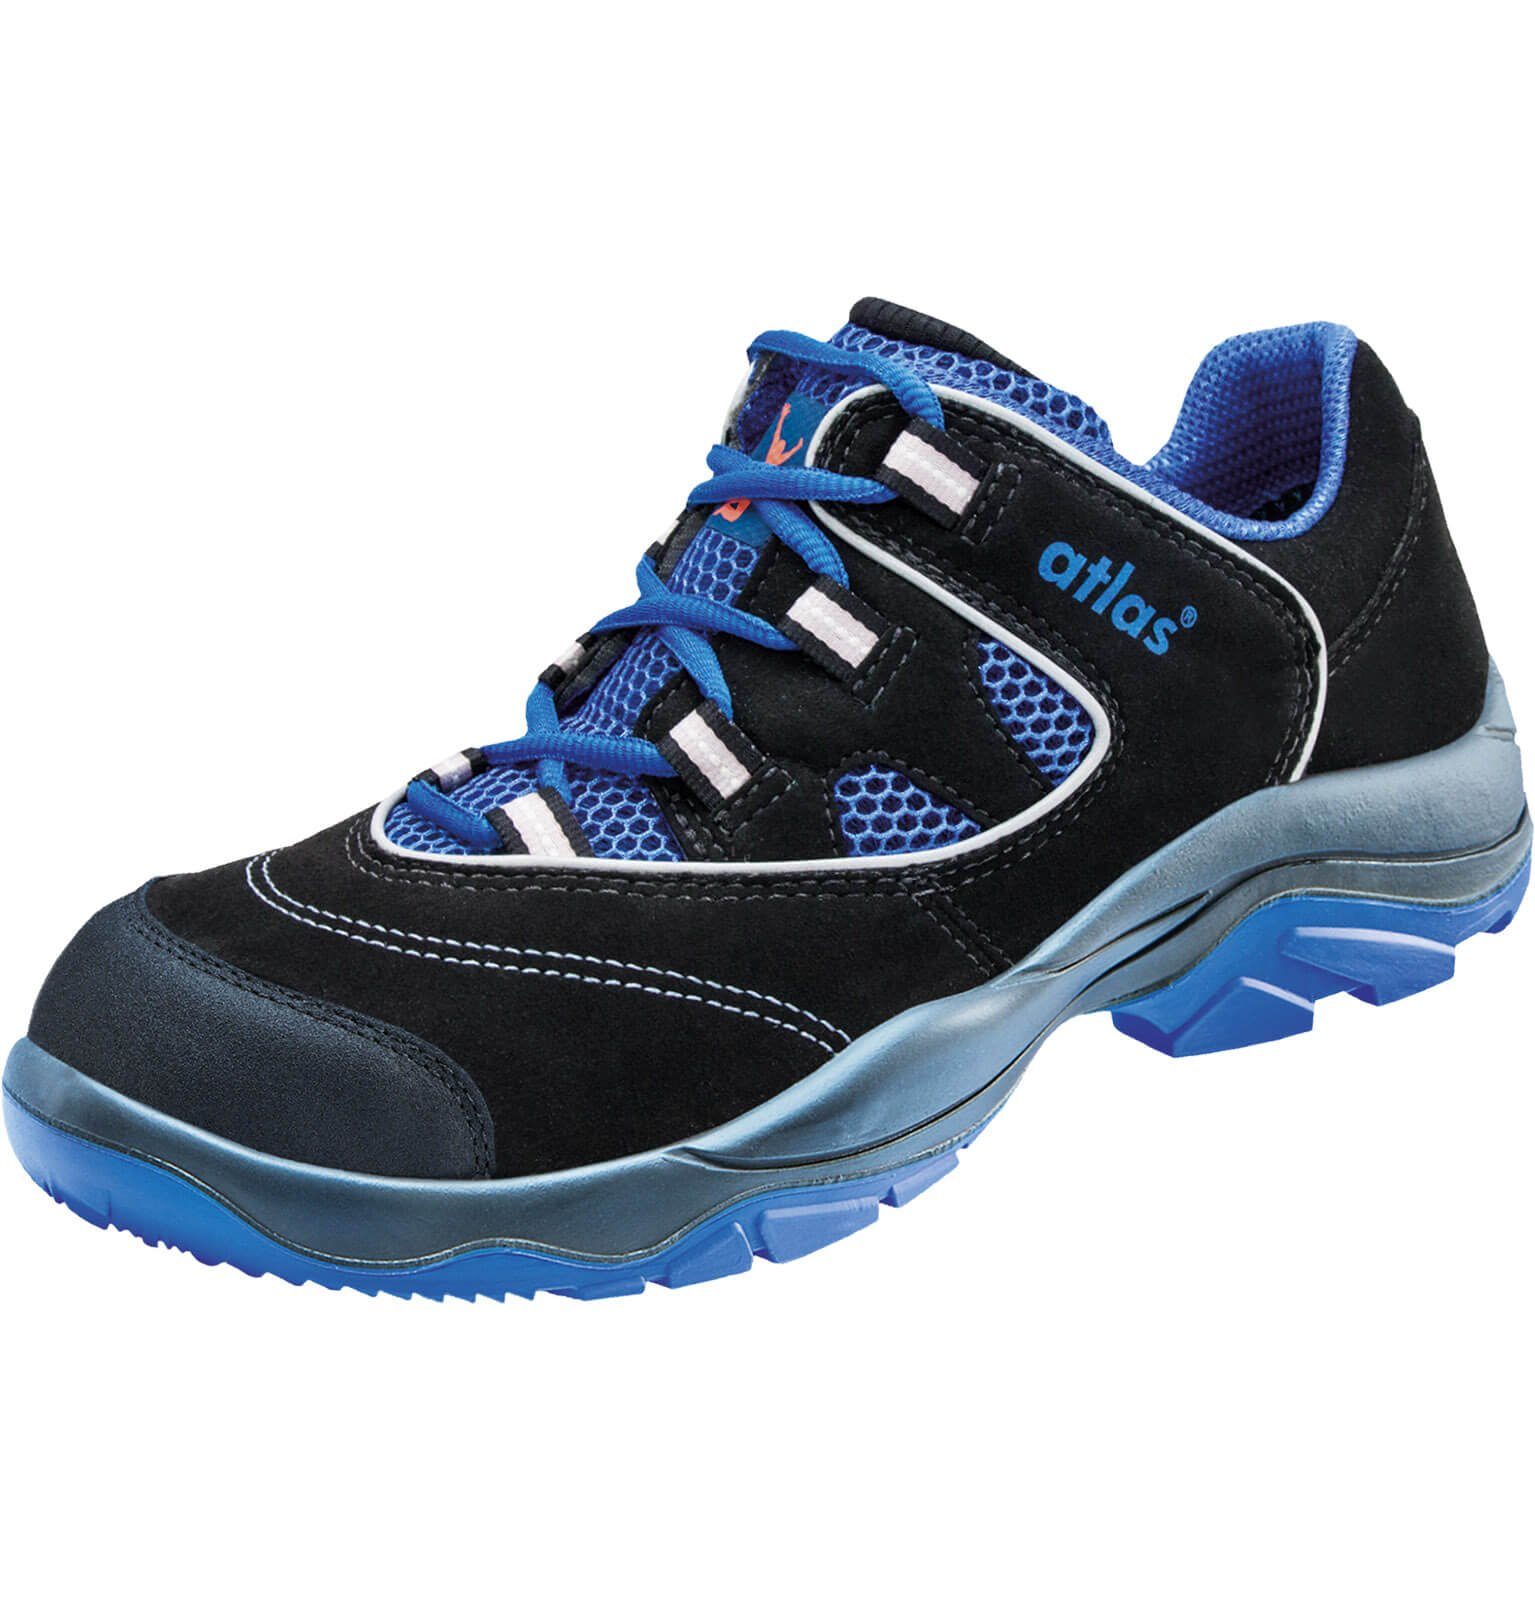 Atlas Schuhe XP 205 2.0 EN ISO 20345 S1P SRC schwarz/blau Sicherheitsschuh | Arbeitsschuhe